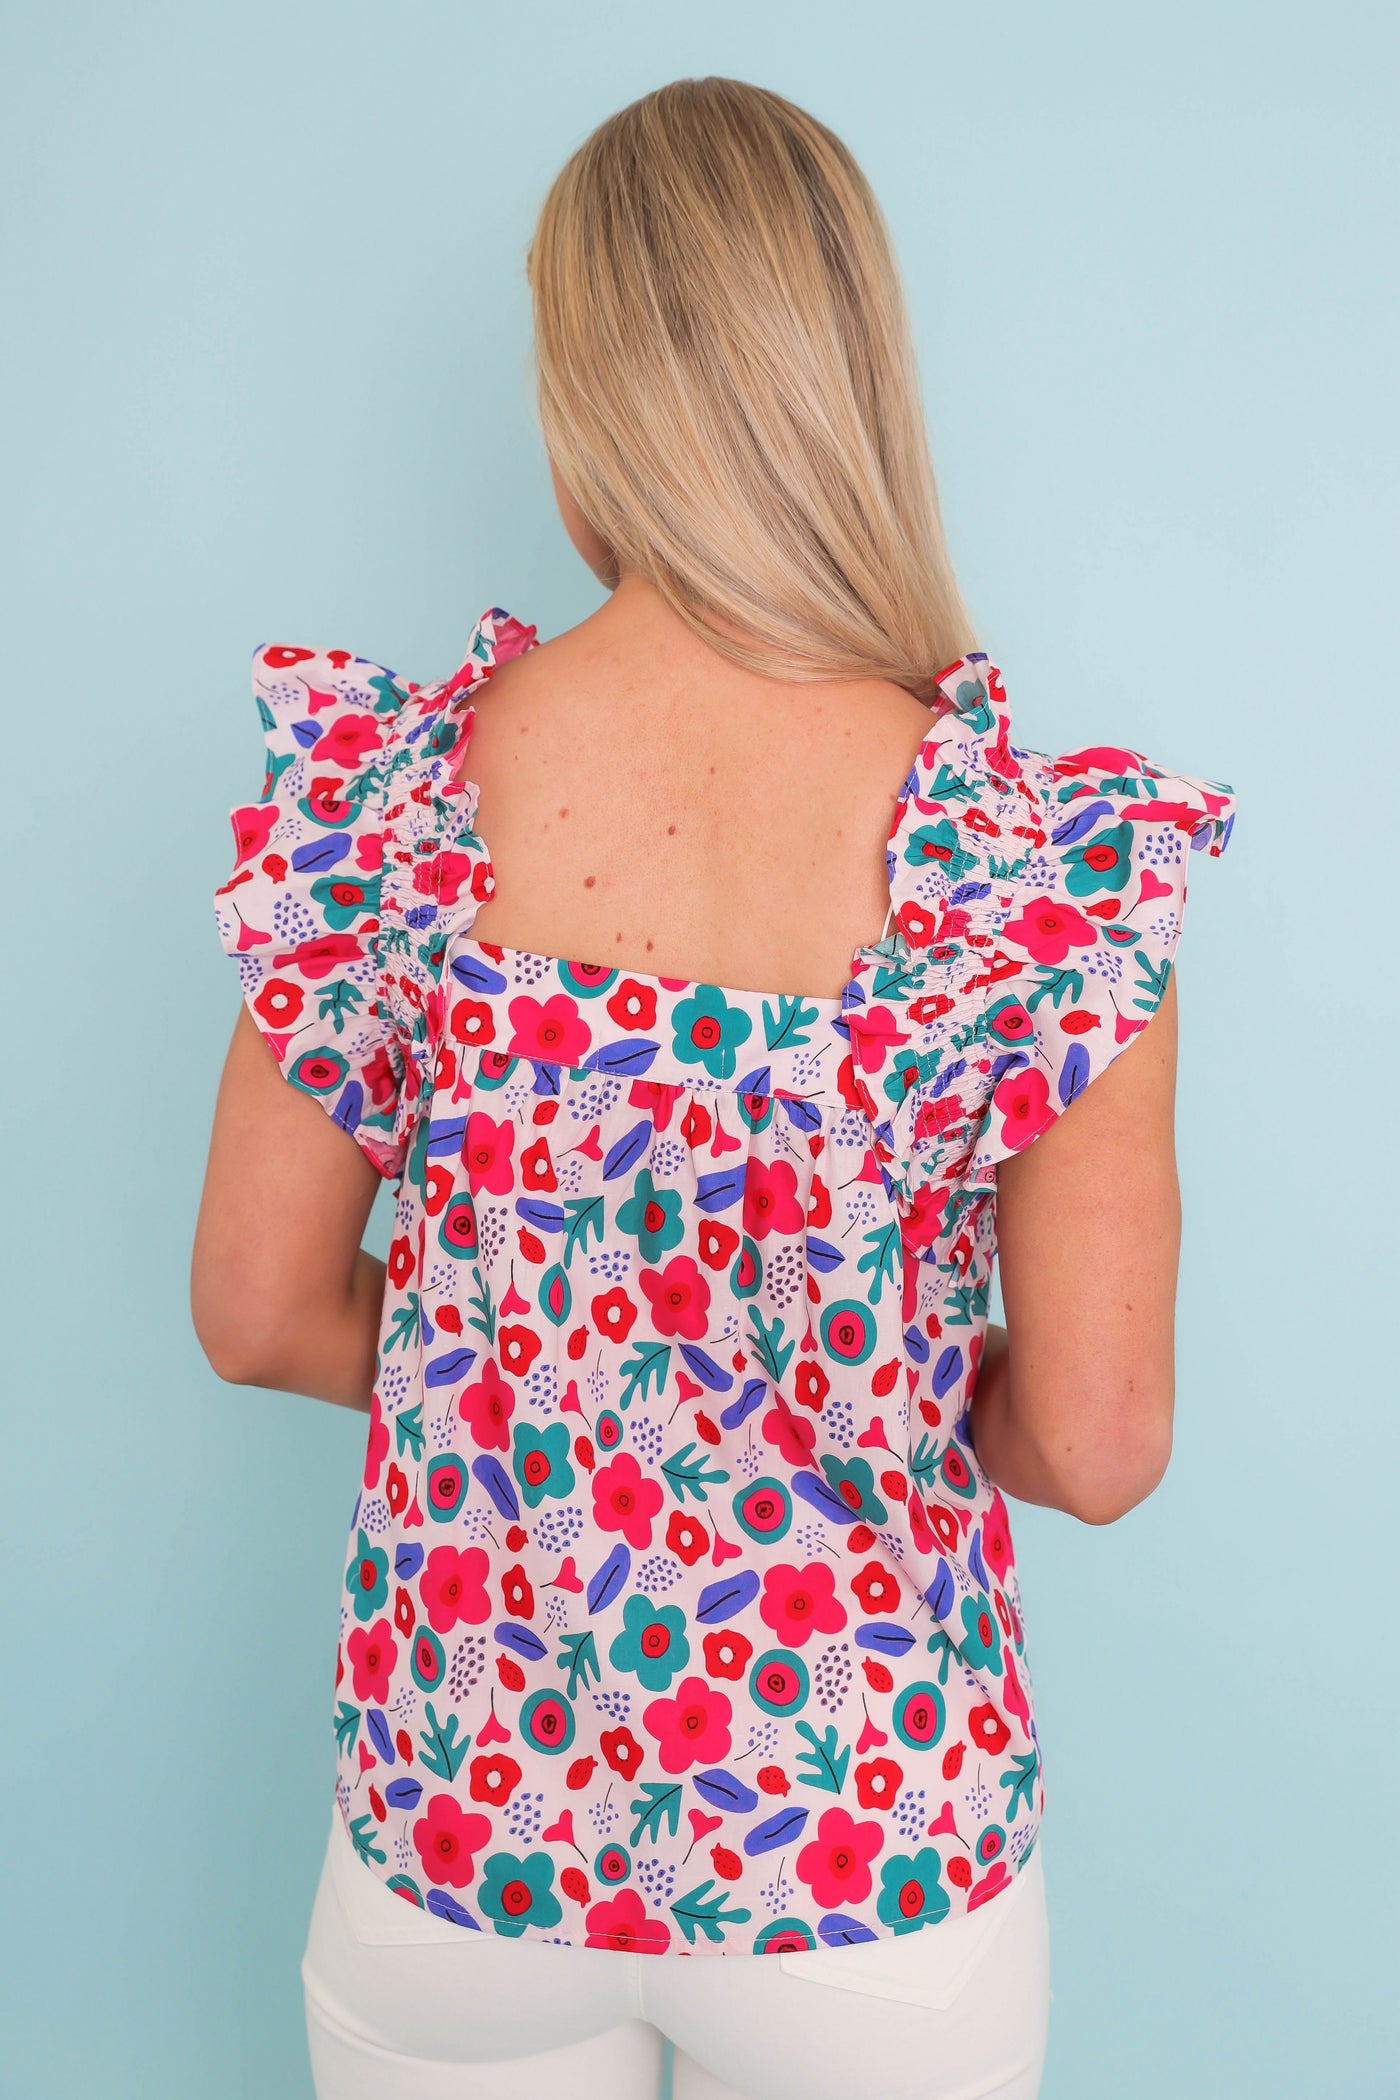 Women's Retro Print Blouse- Bright Floral Print Top- Jodifl Ruffle Tops